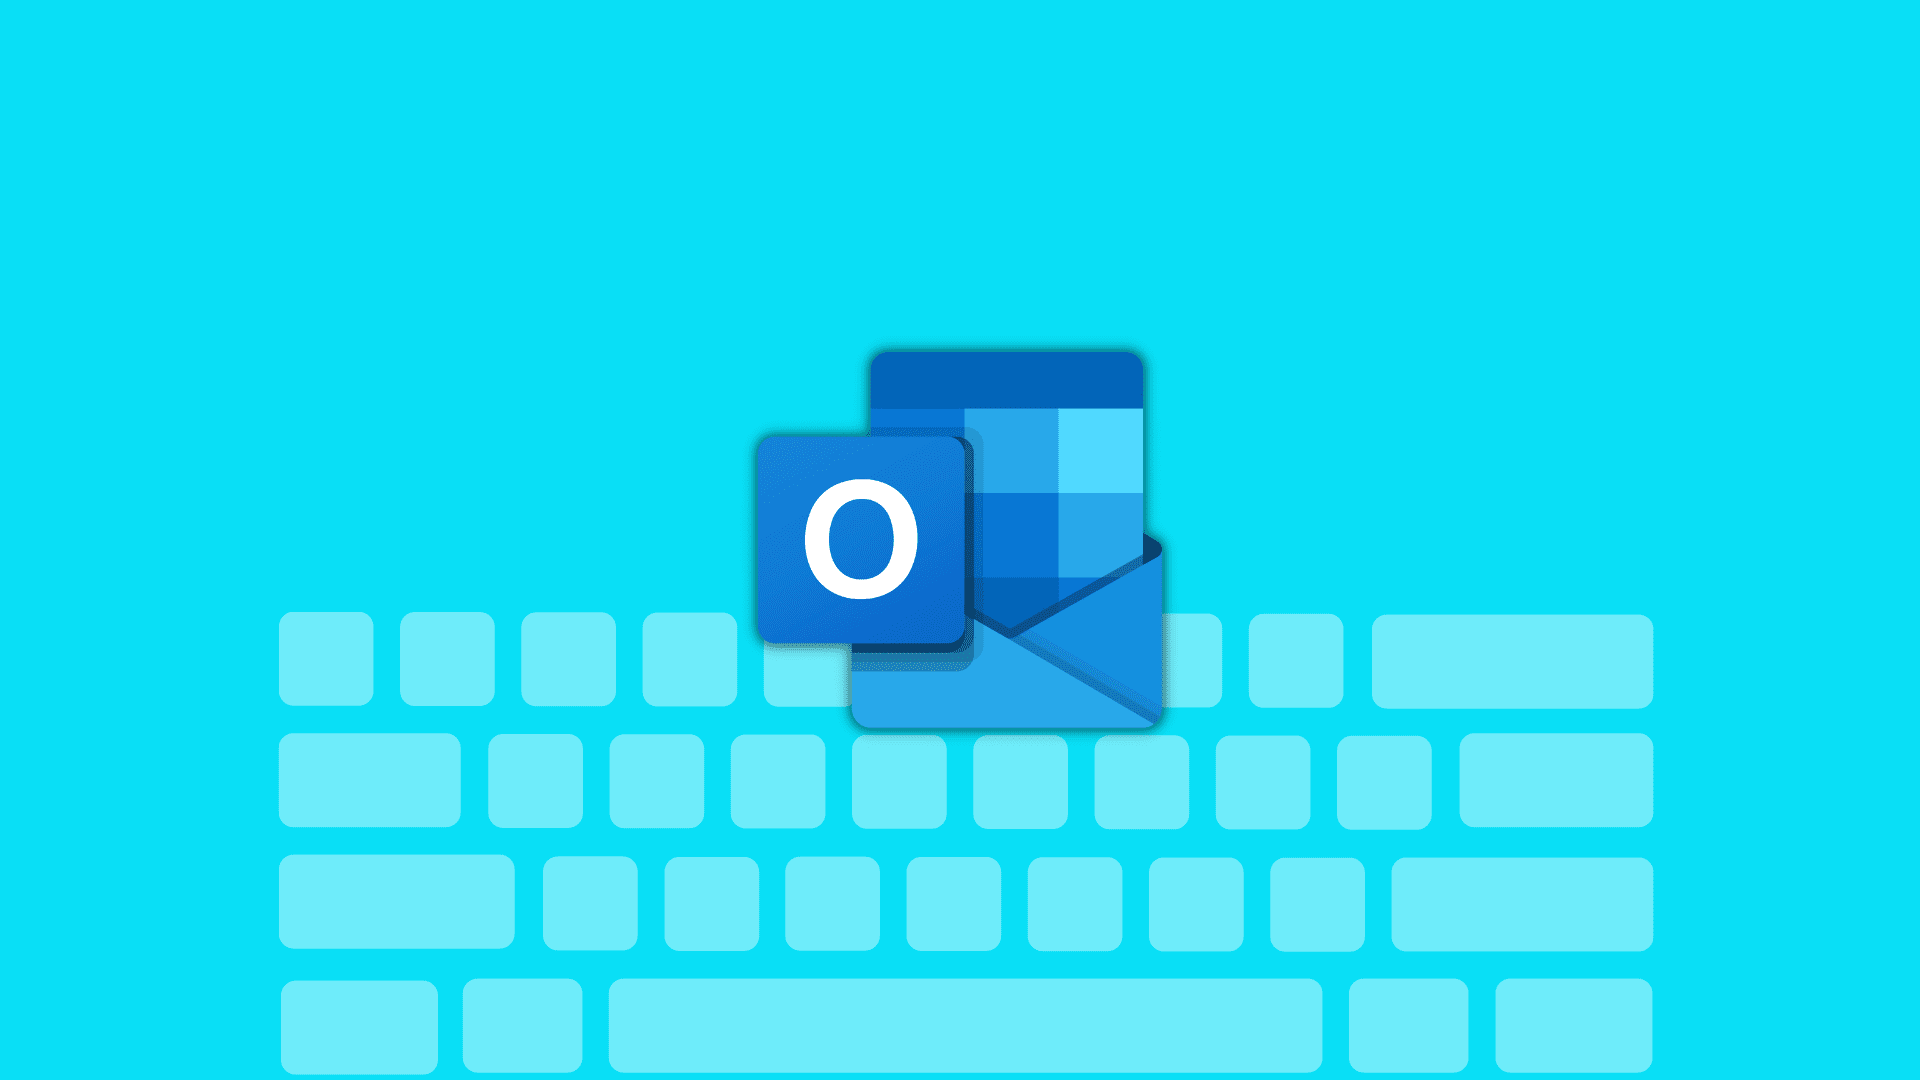 Keyboard shortcuts for Microsoft Outlook on Mac